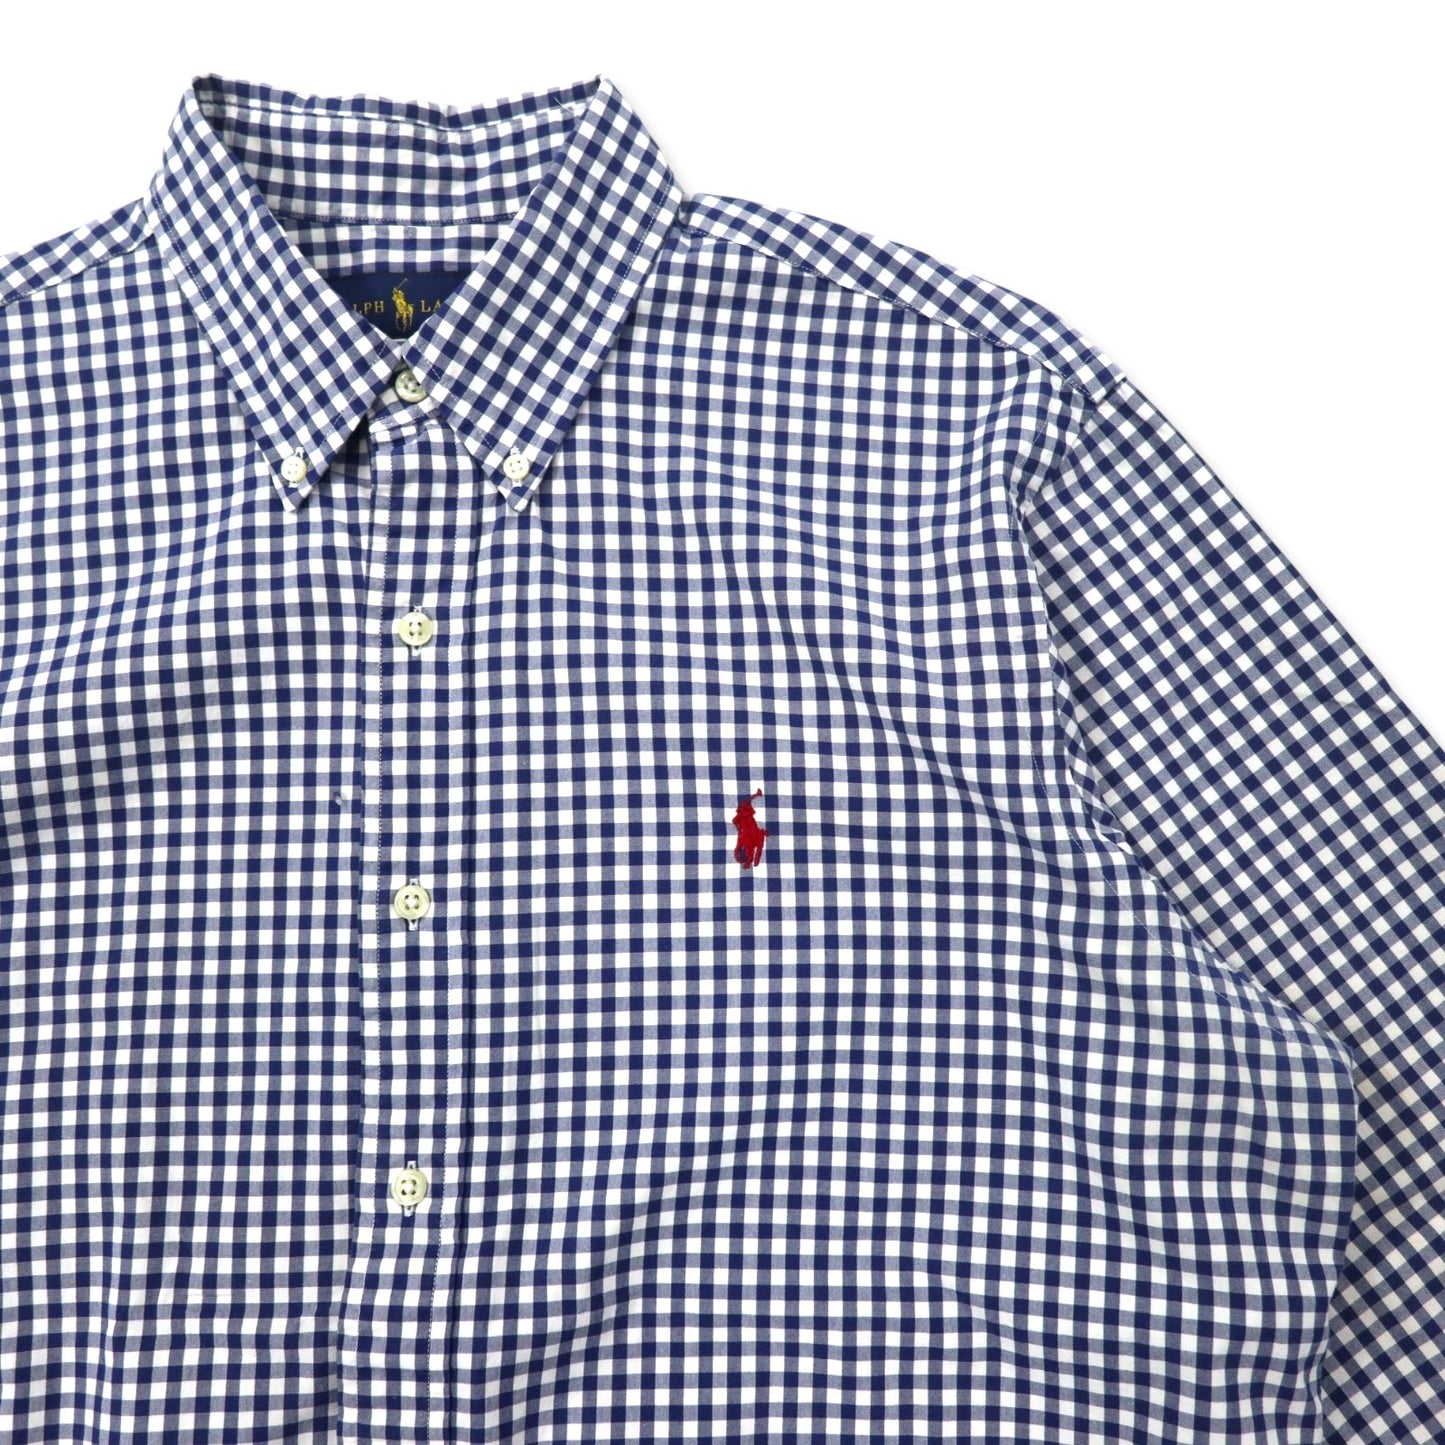 RALPH LAUREN ギンガムチェック ボタンダウンシャツ L ブルー コットン スモールポニー刺繍